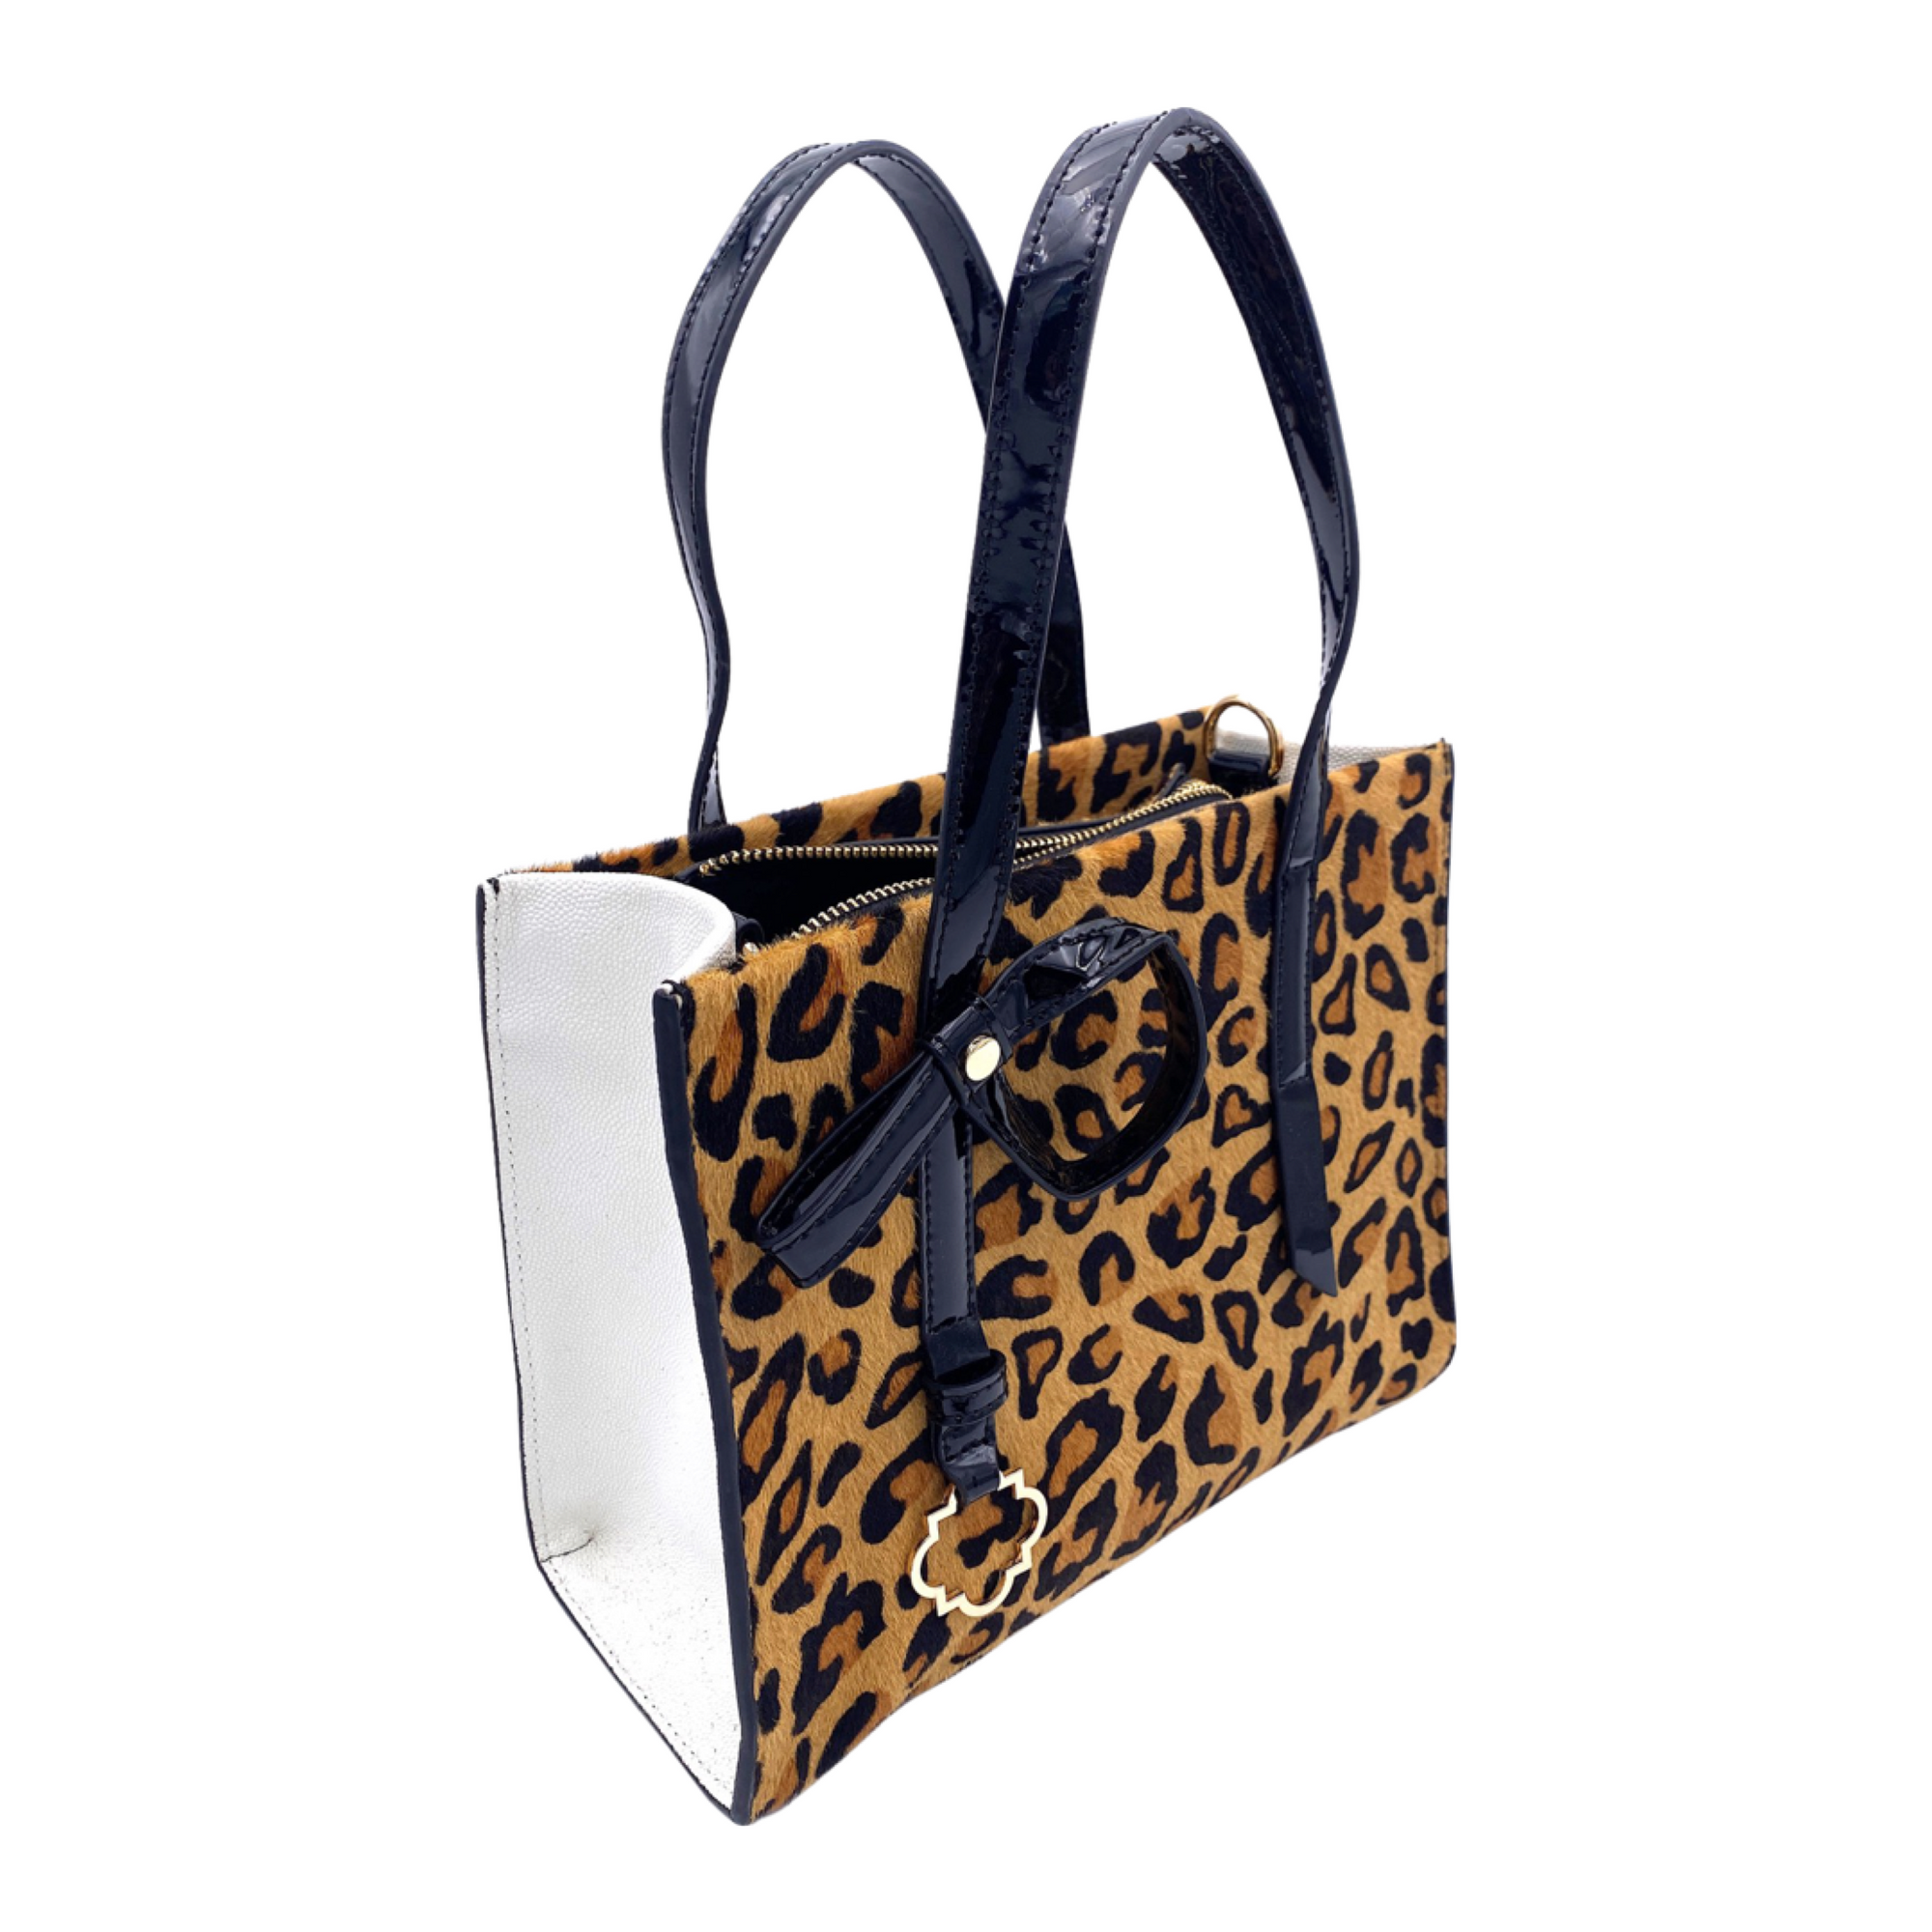 Park Avenue Bag in Leopard